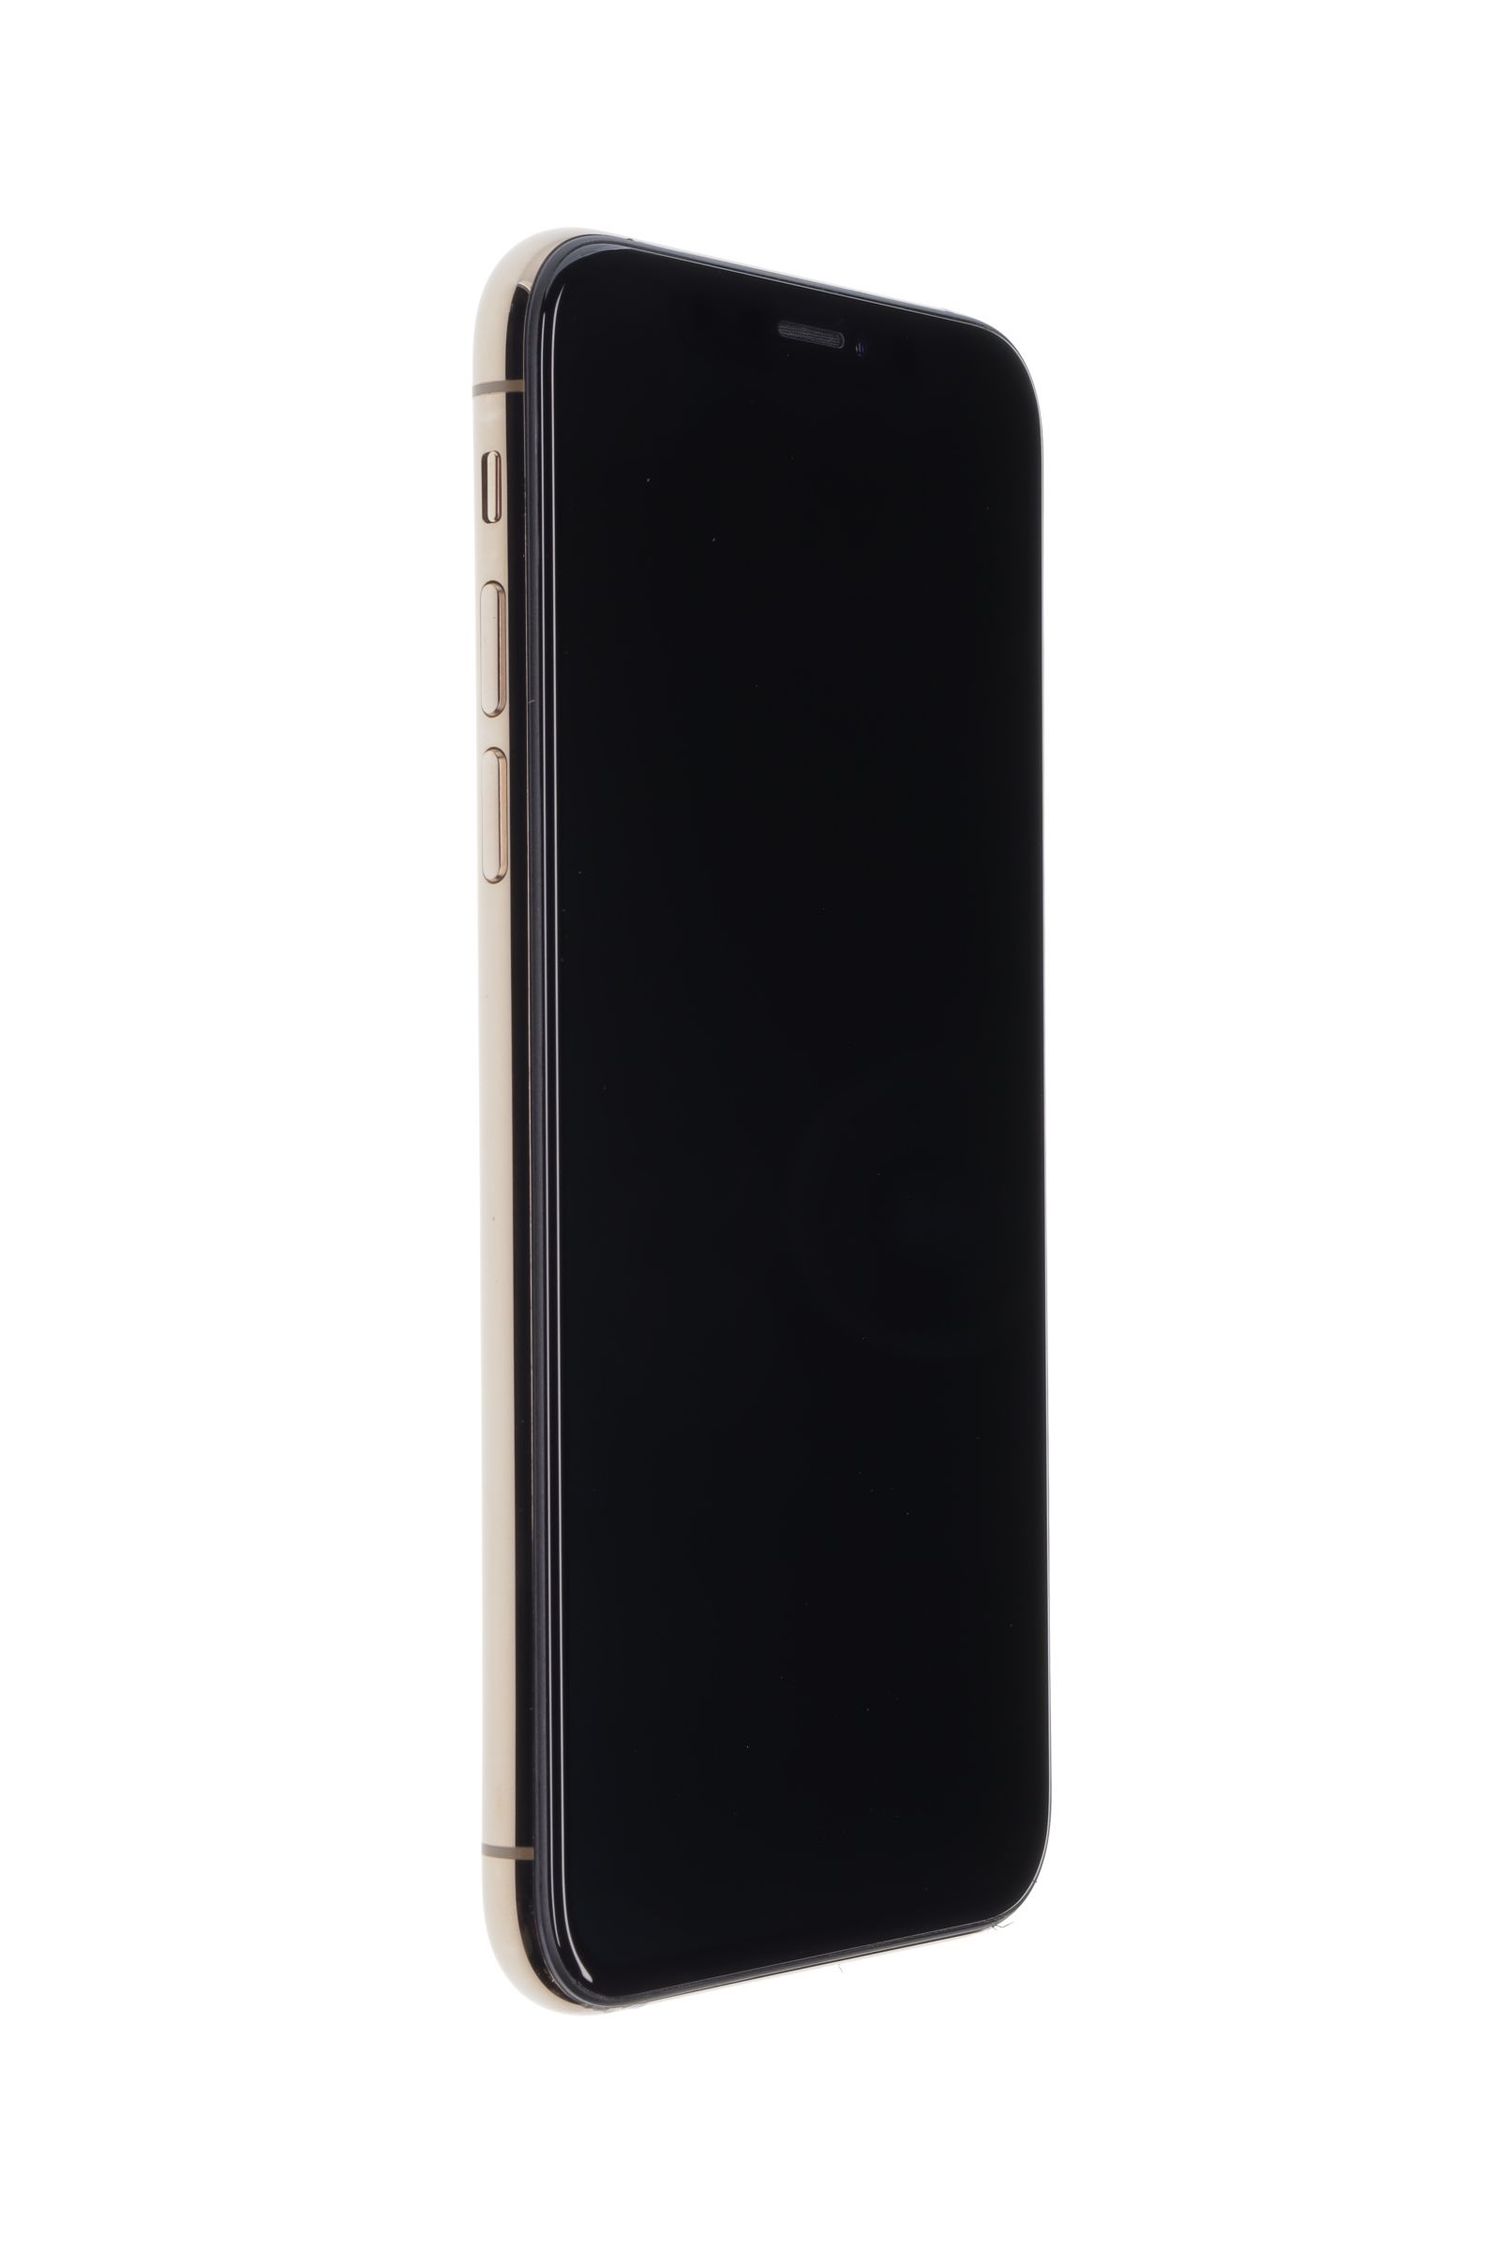 Mobiltelefon Apple iPhone XS, Gold, 64 GB, Foarte Bun